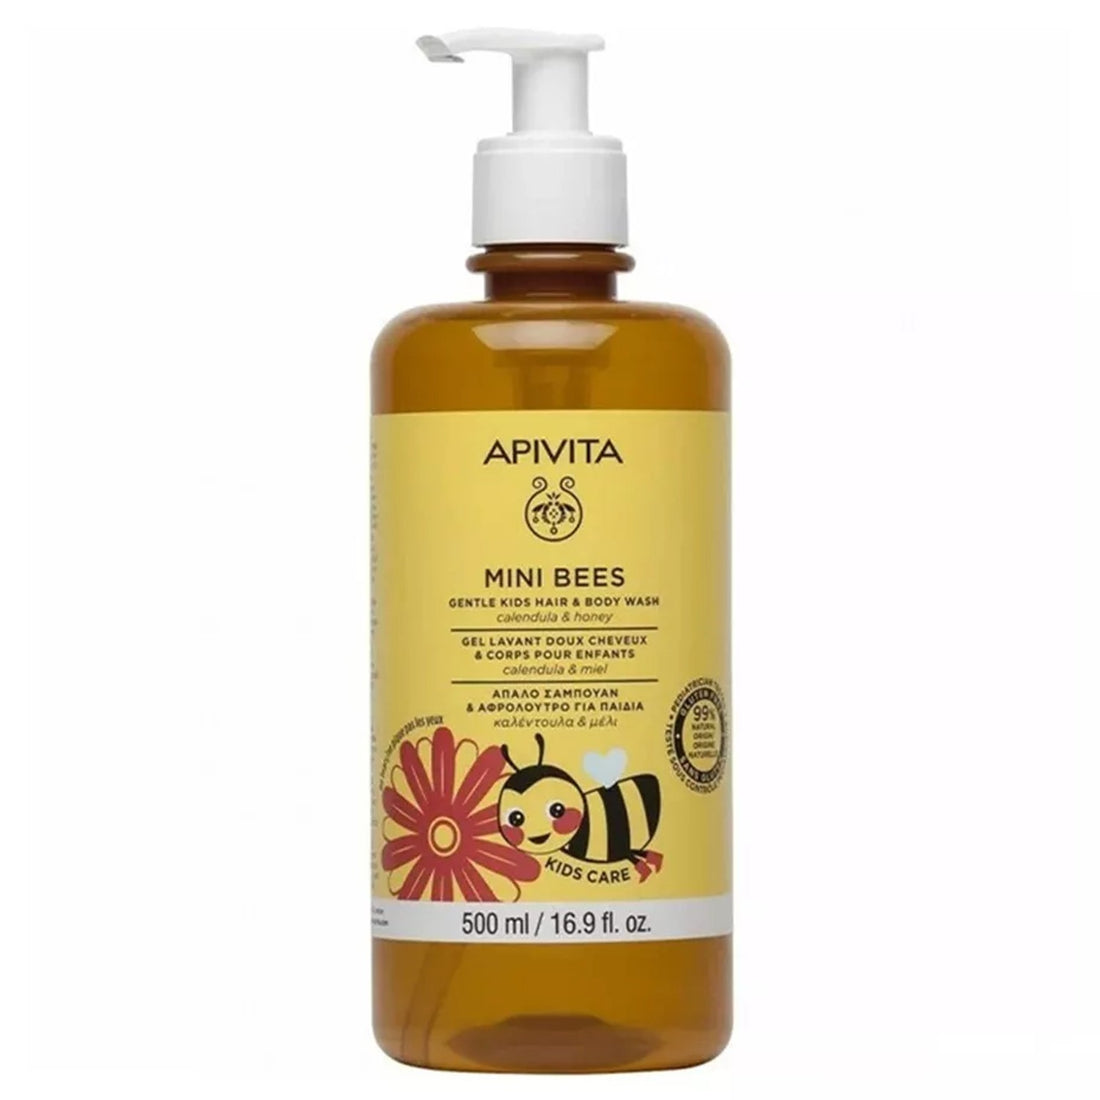 Apivita Gentle Kids Hair and Body Wash 500 ml